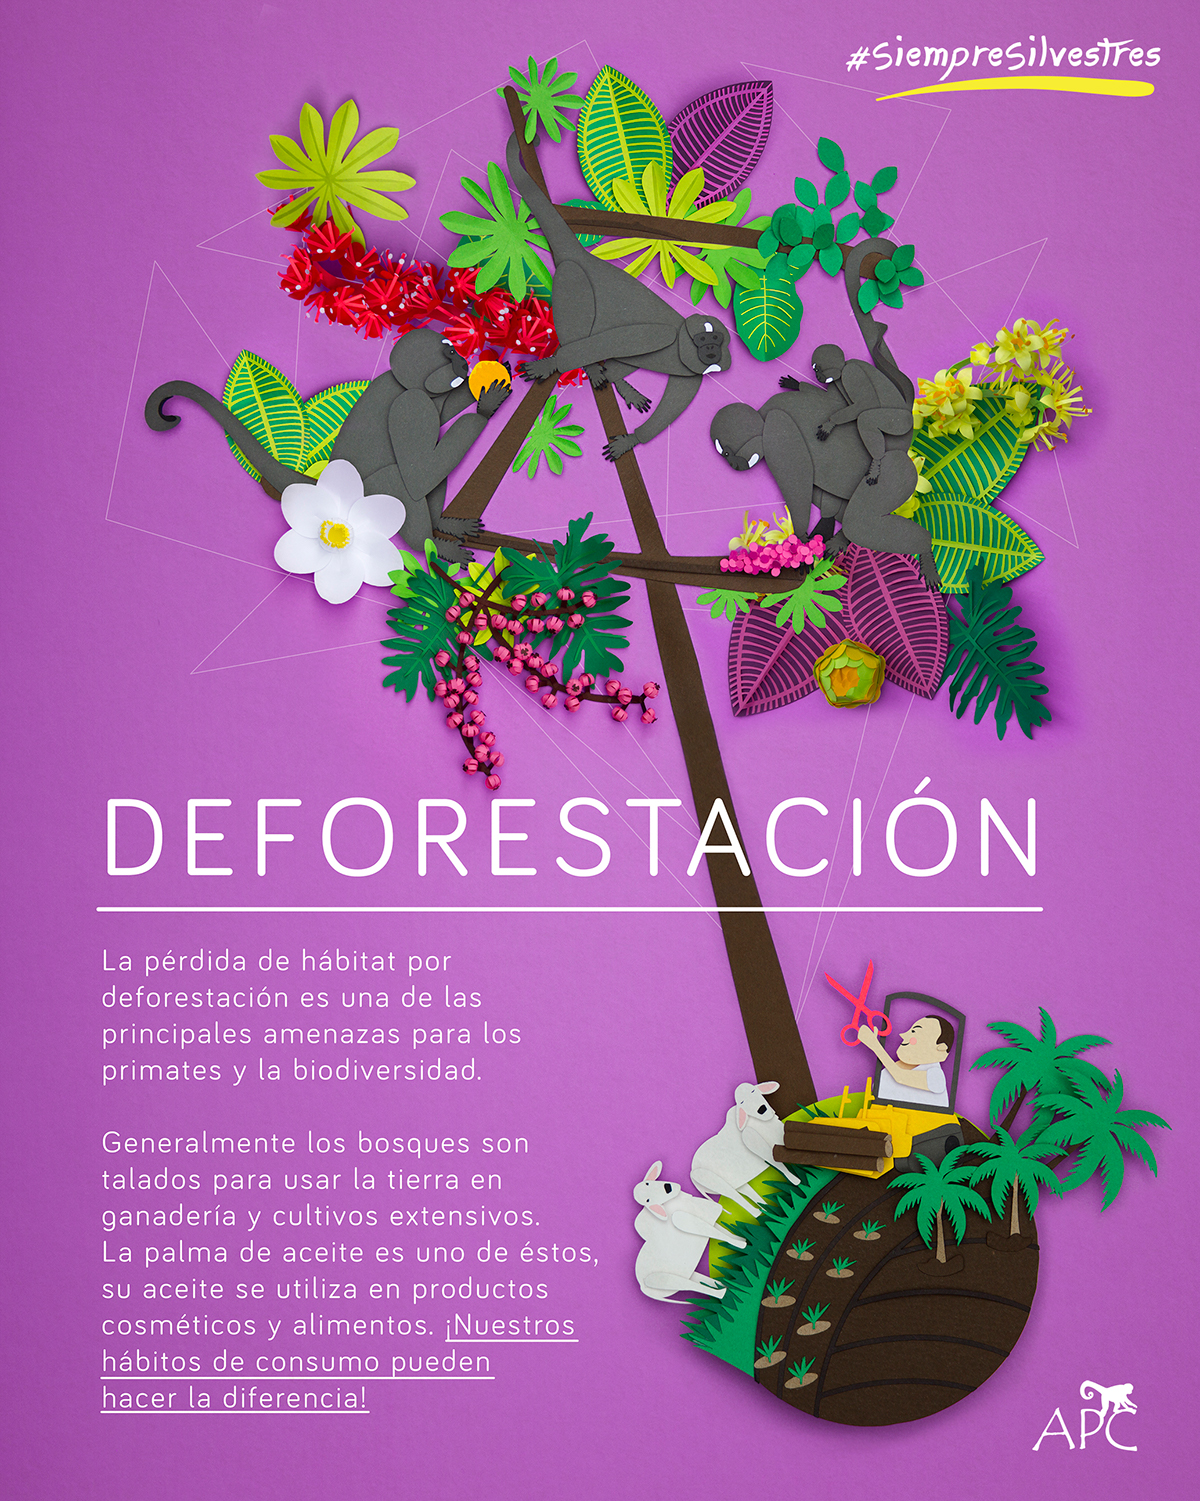 papercraft papercut papertoy Nature biodiversity monkey Education conservation ILLUSTRATION  colombia